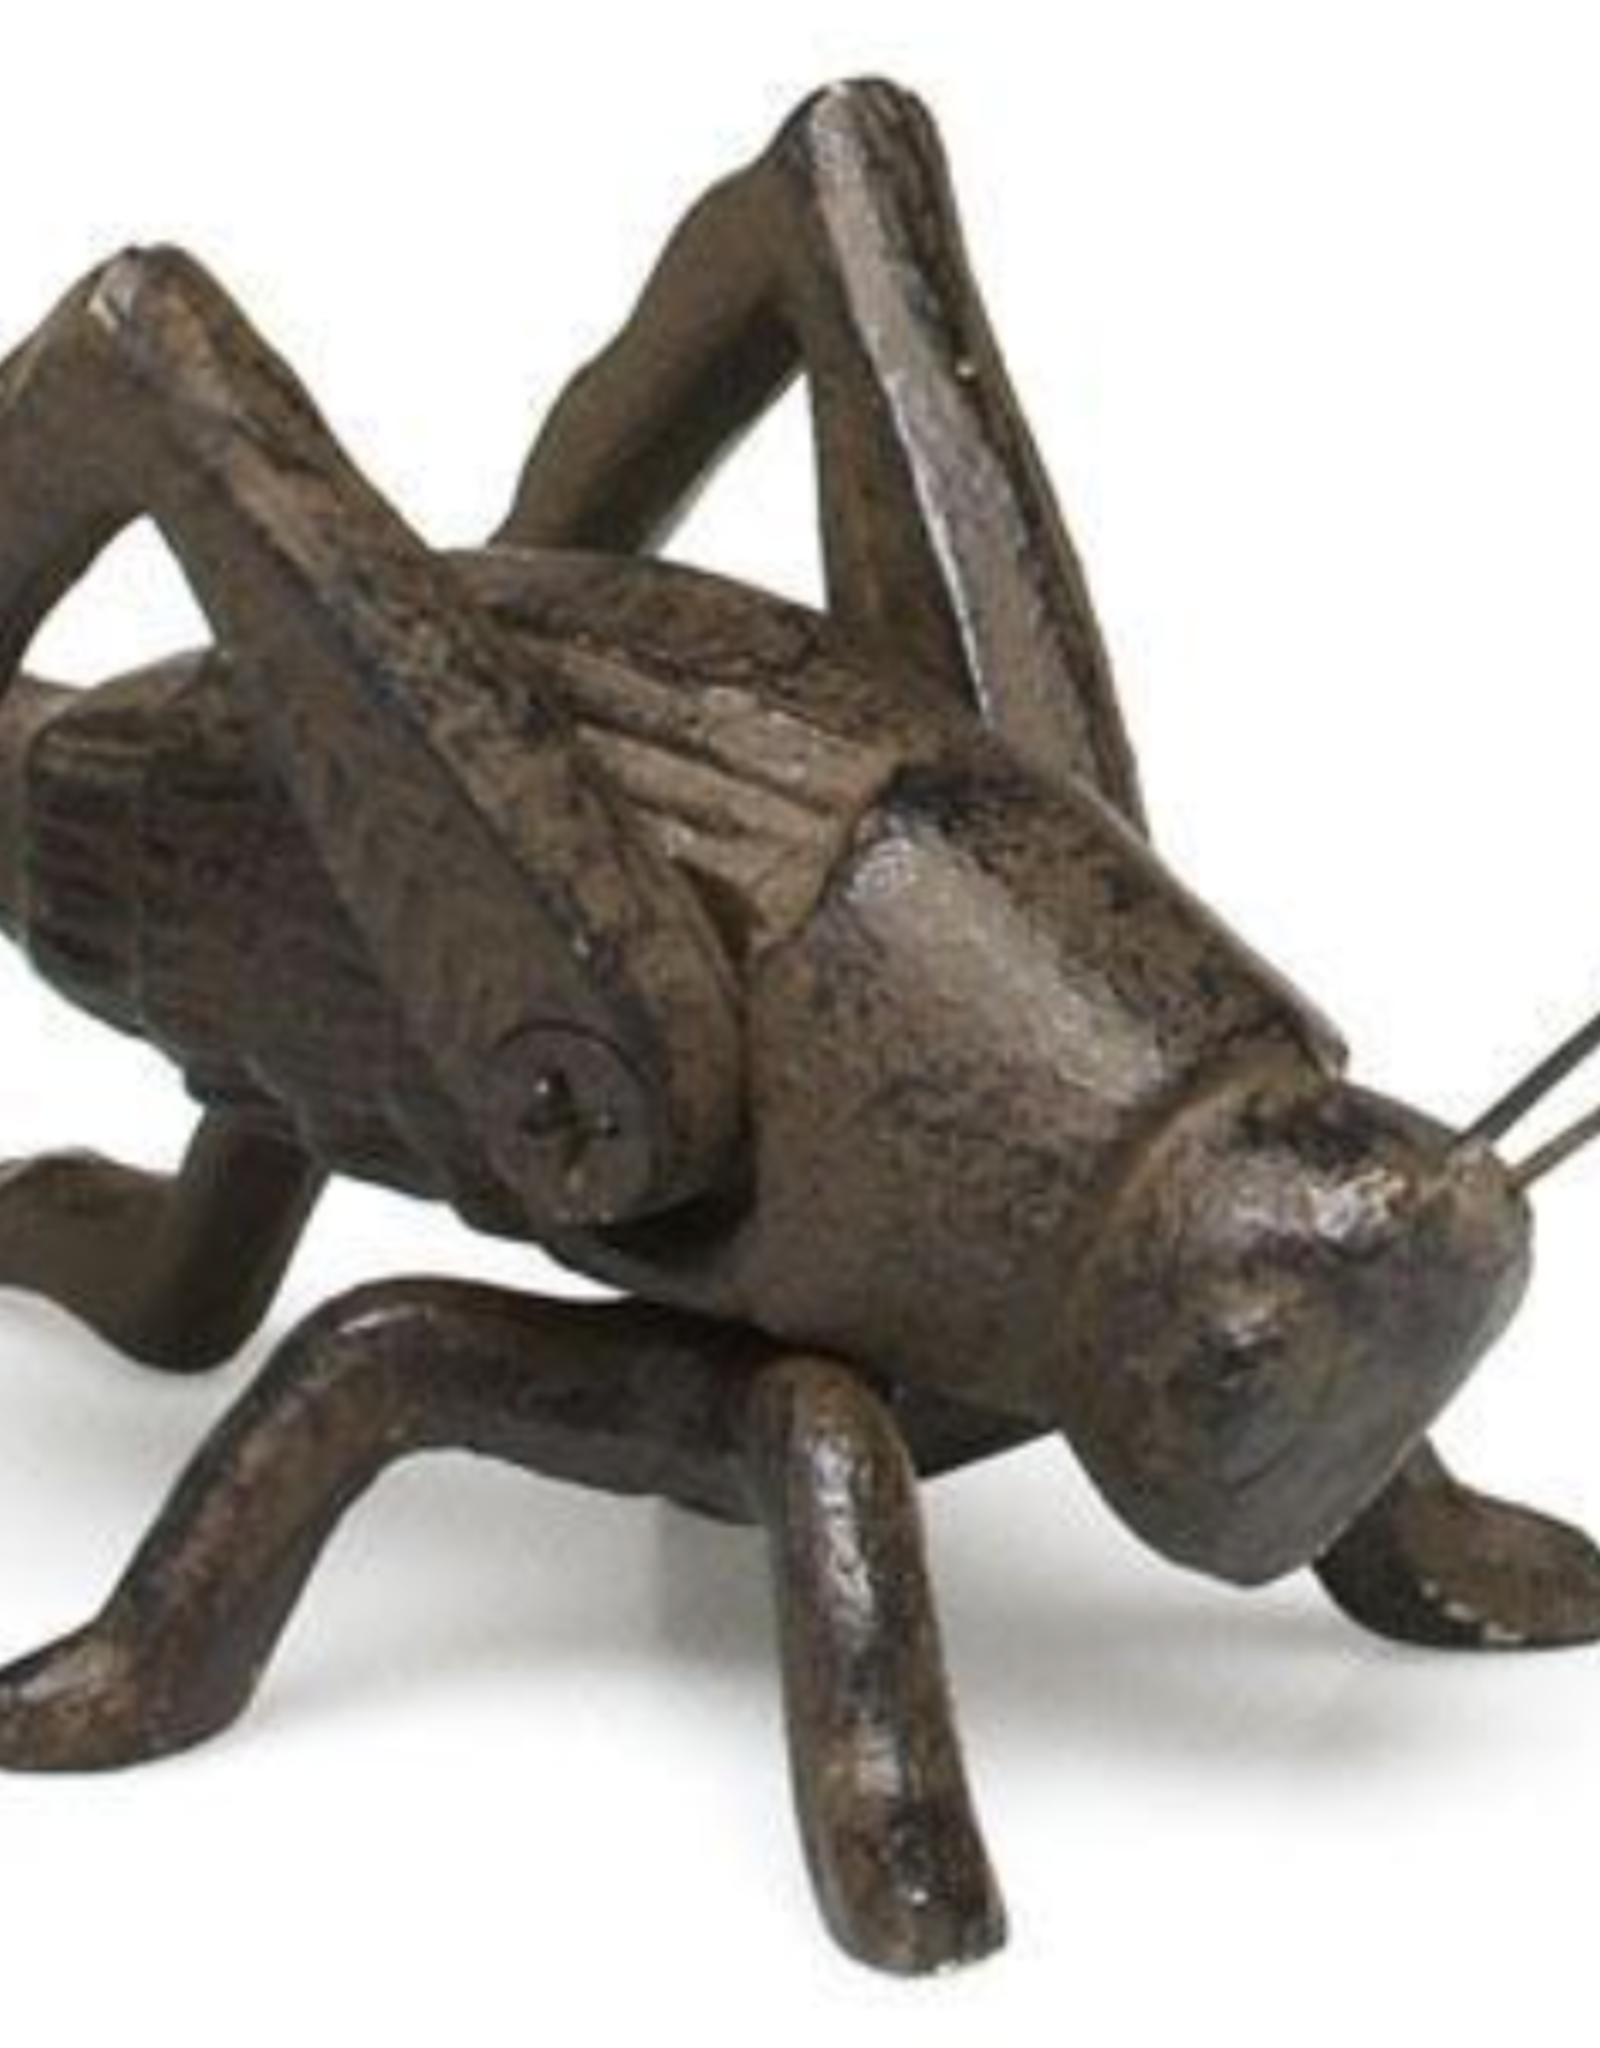 Abbott AB274182 Small Grasshopper Figure Cast Iron Drk Brwn - 5"L